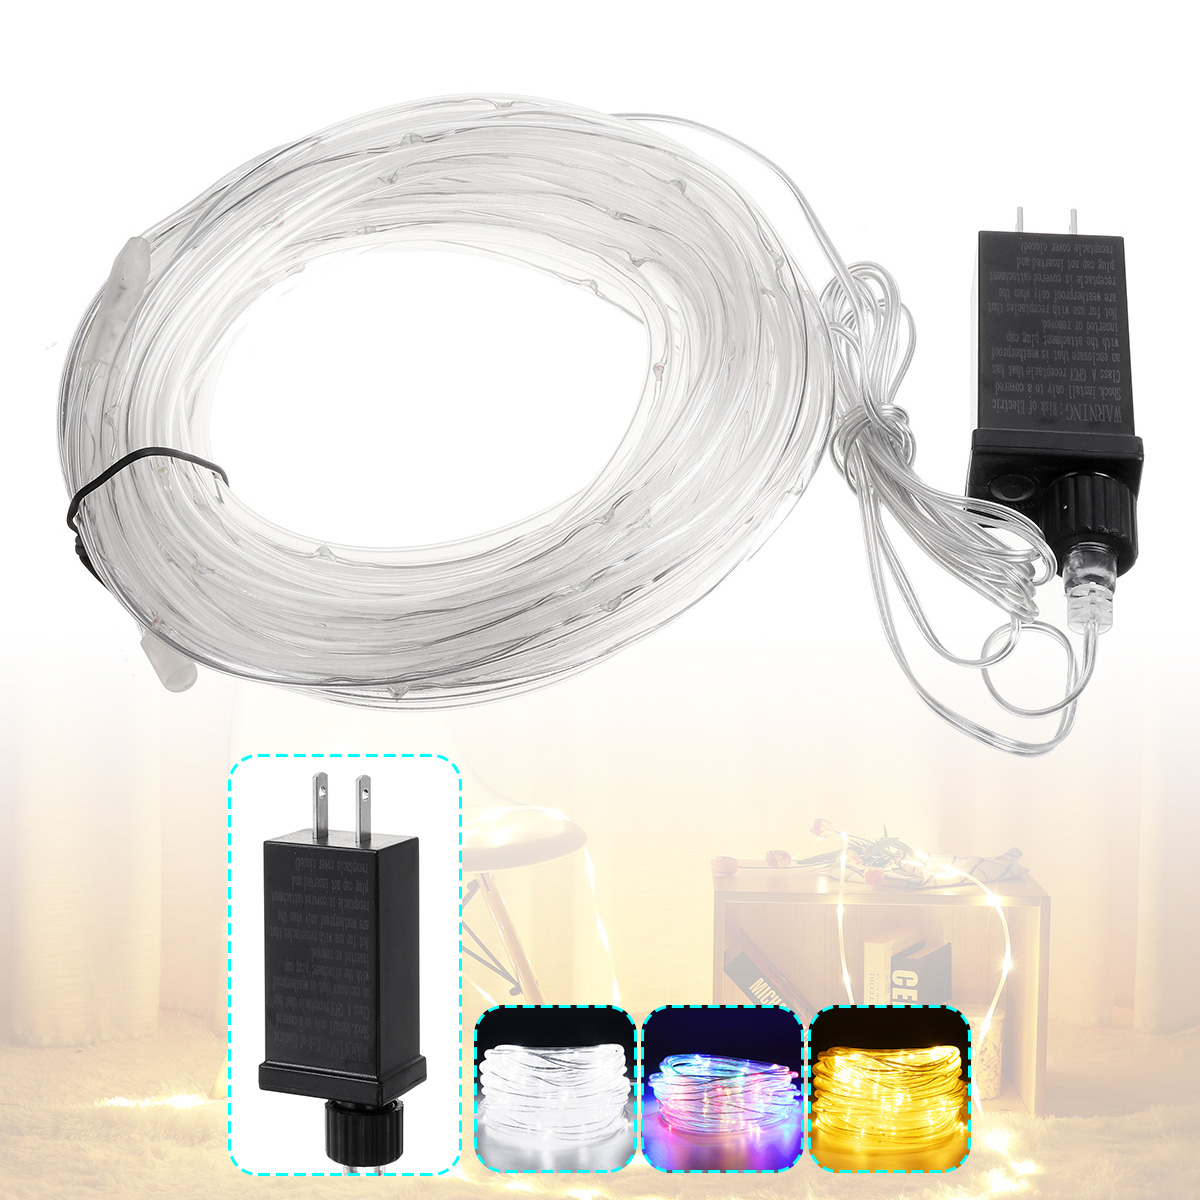 10M-100LED-Outdoor-Tube-Rope-Strip-String-Light-RGB-Lamp-Xmas-Home-Decor-Lights-with-US-Plug-1795568-1